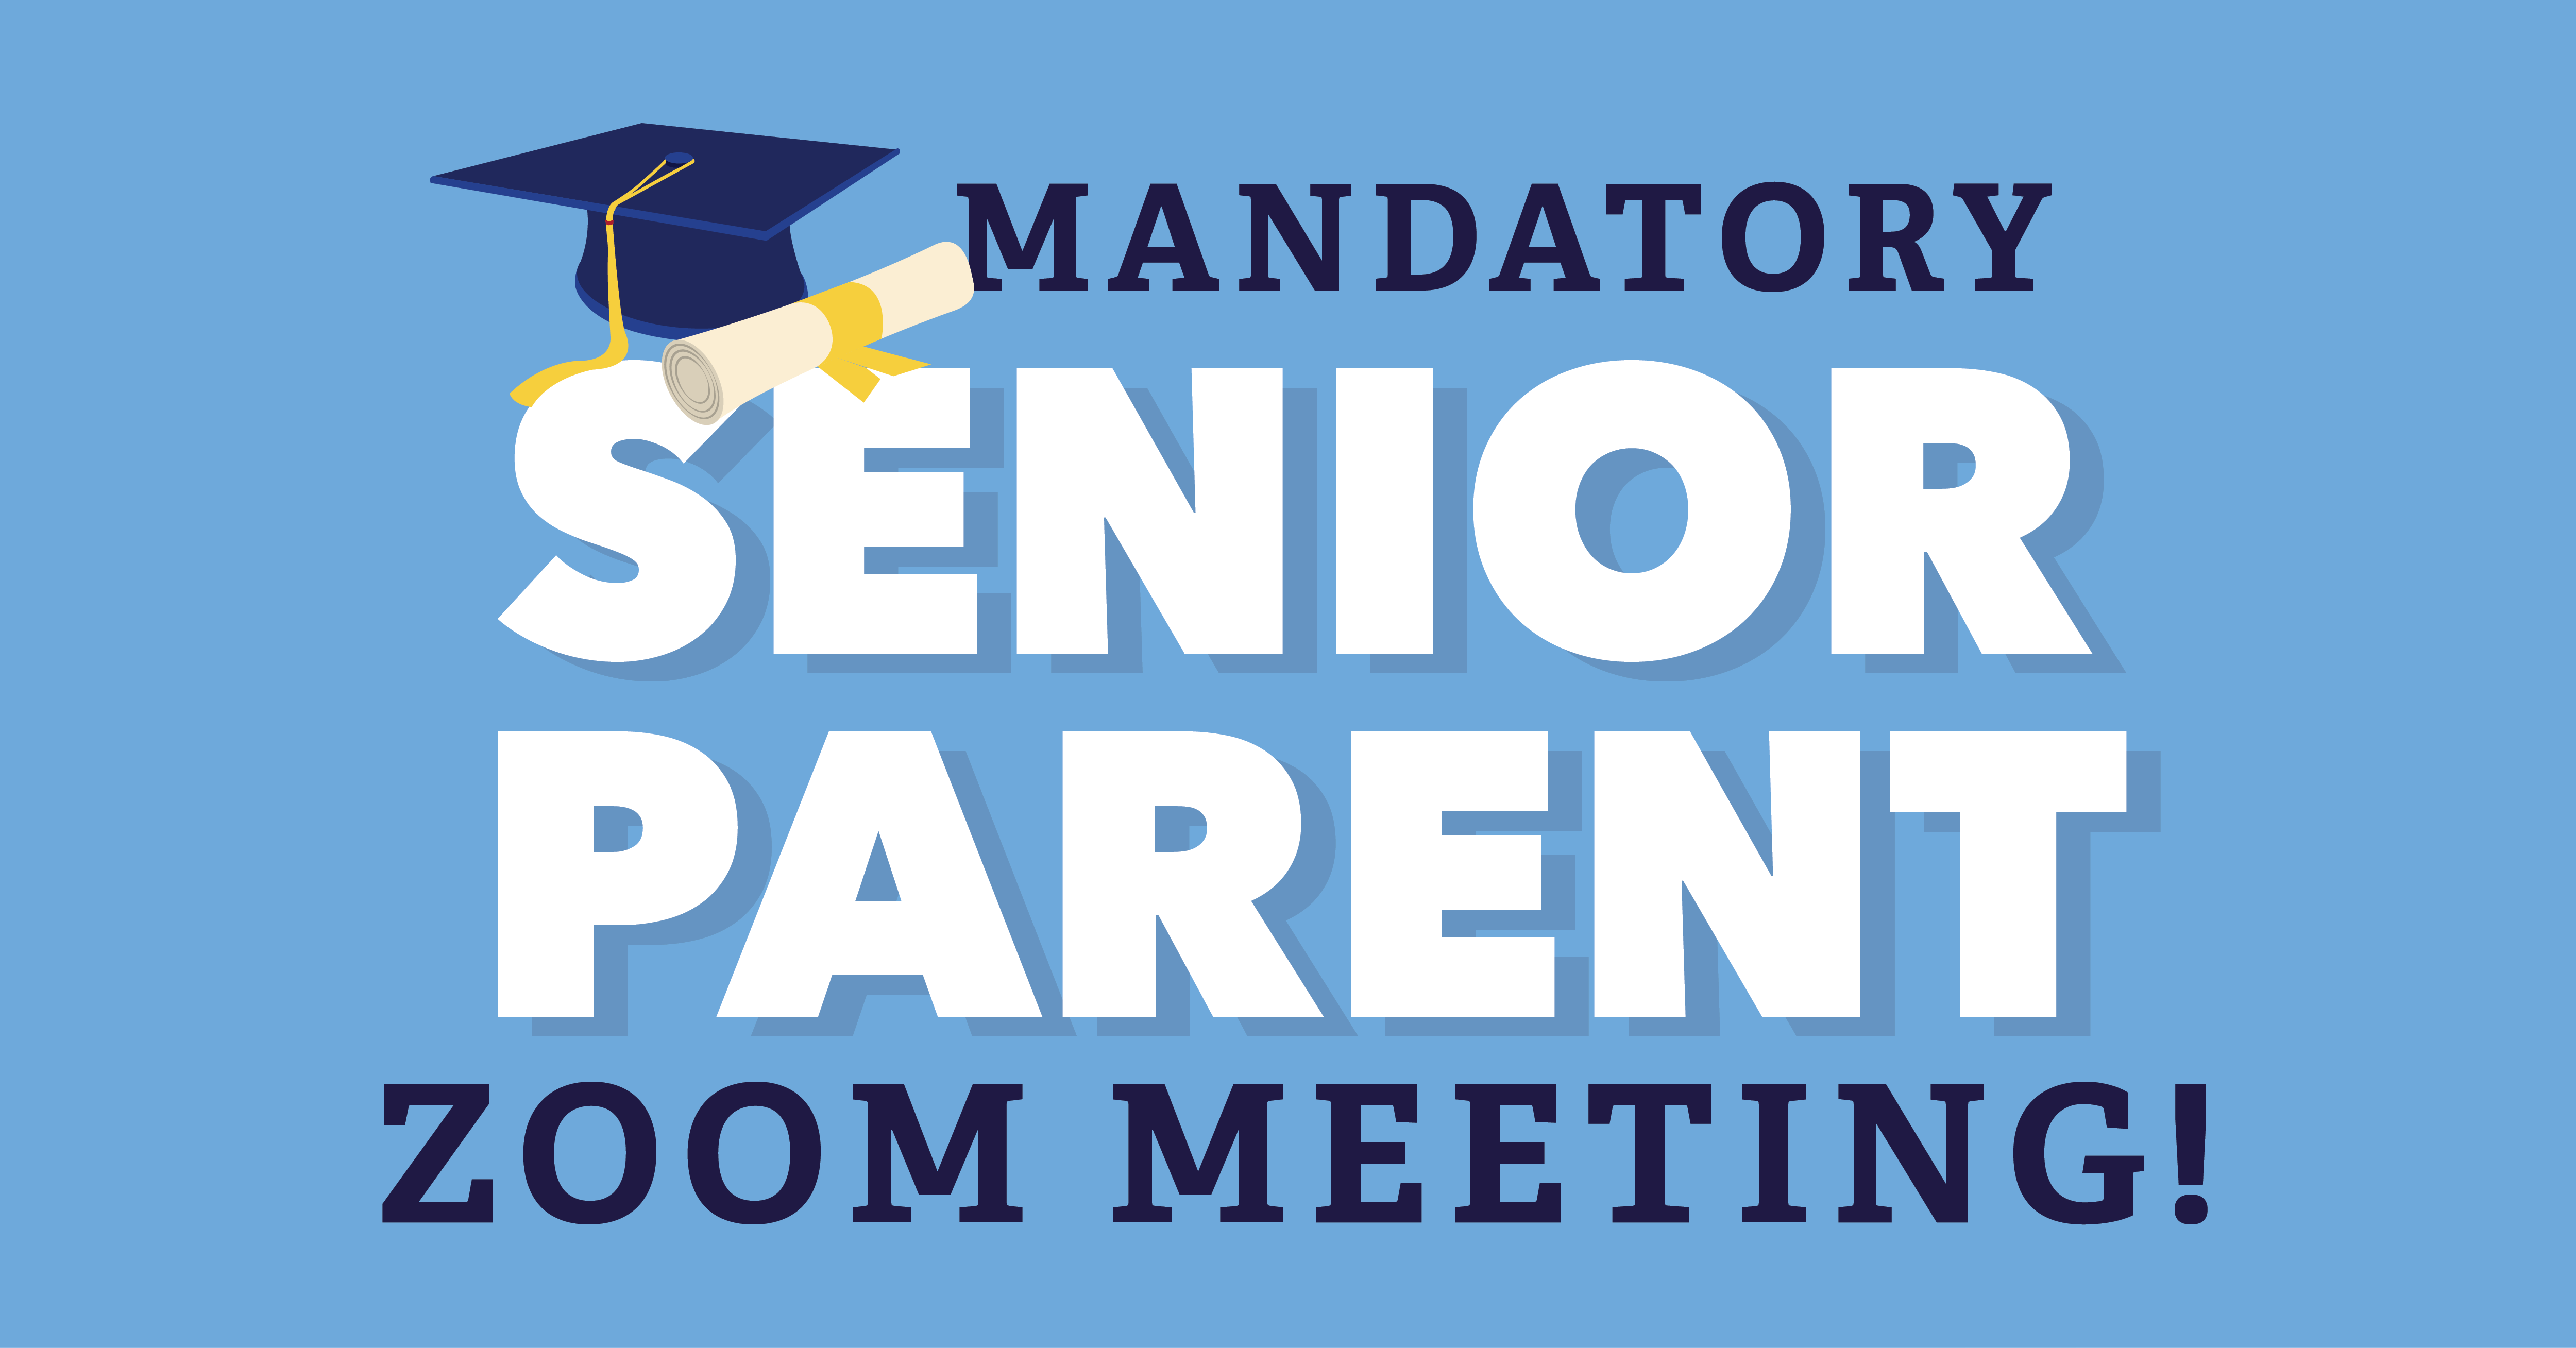 Mandatory Senior Parent Zoom Meeting